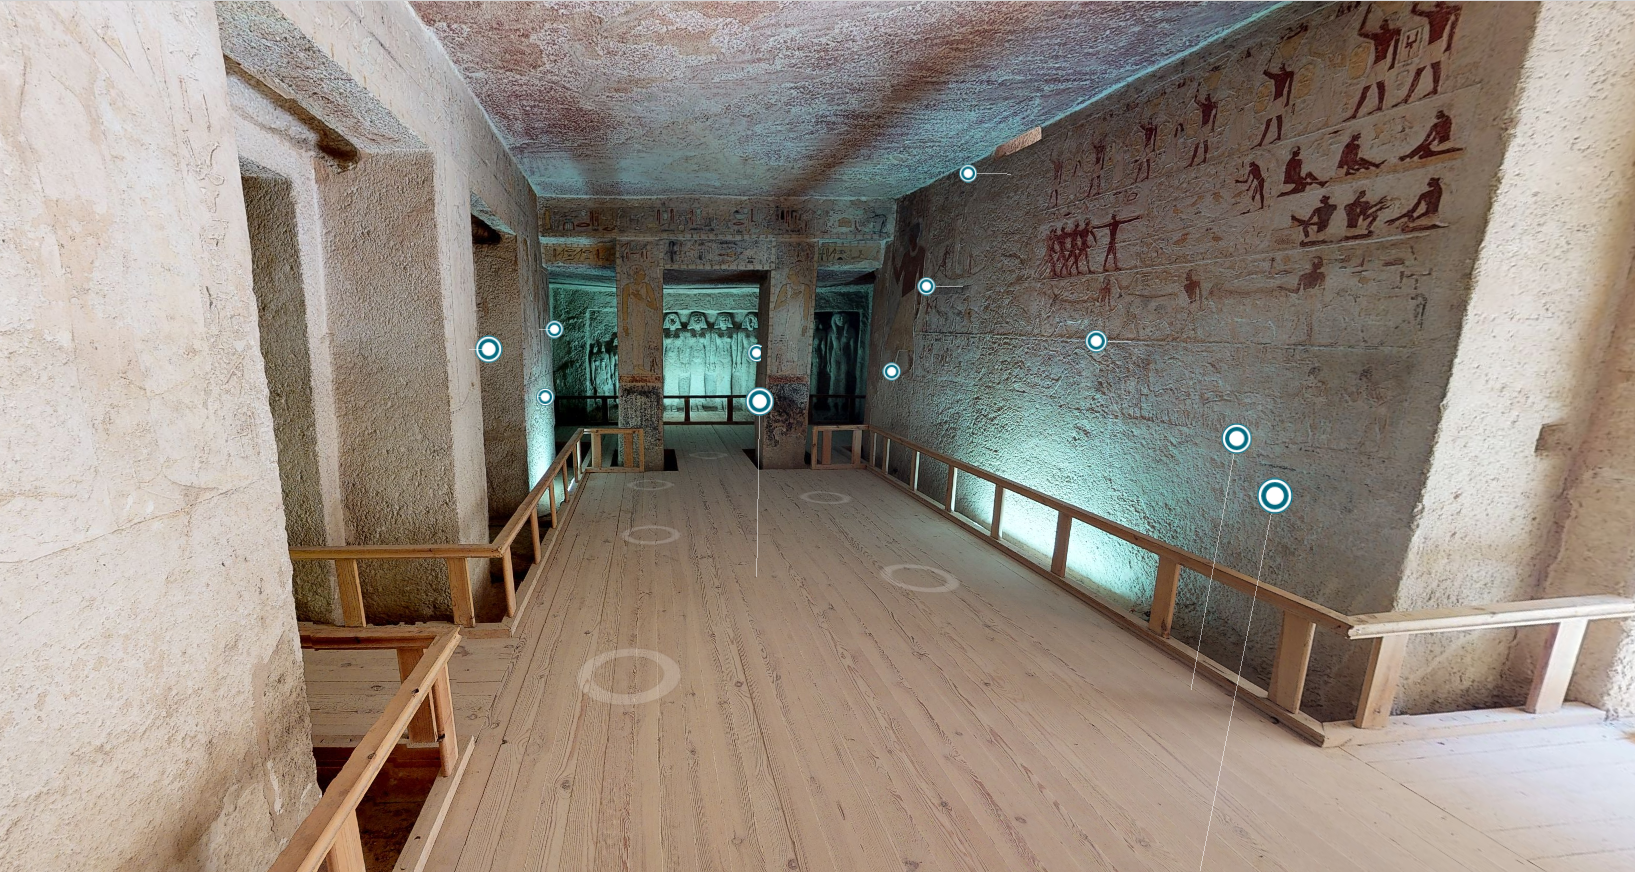 Reprodução virtual da tumba da Rainha Meresankh III